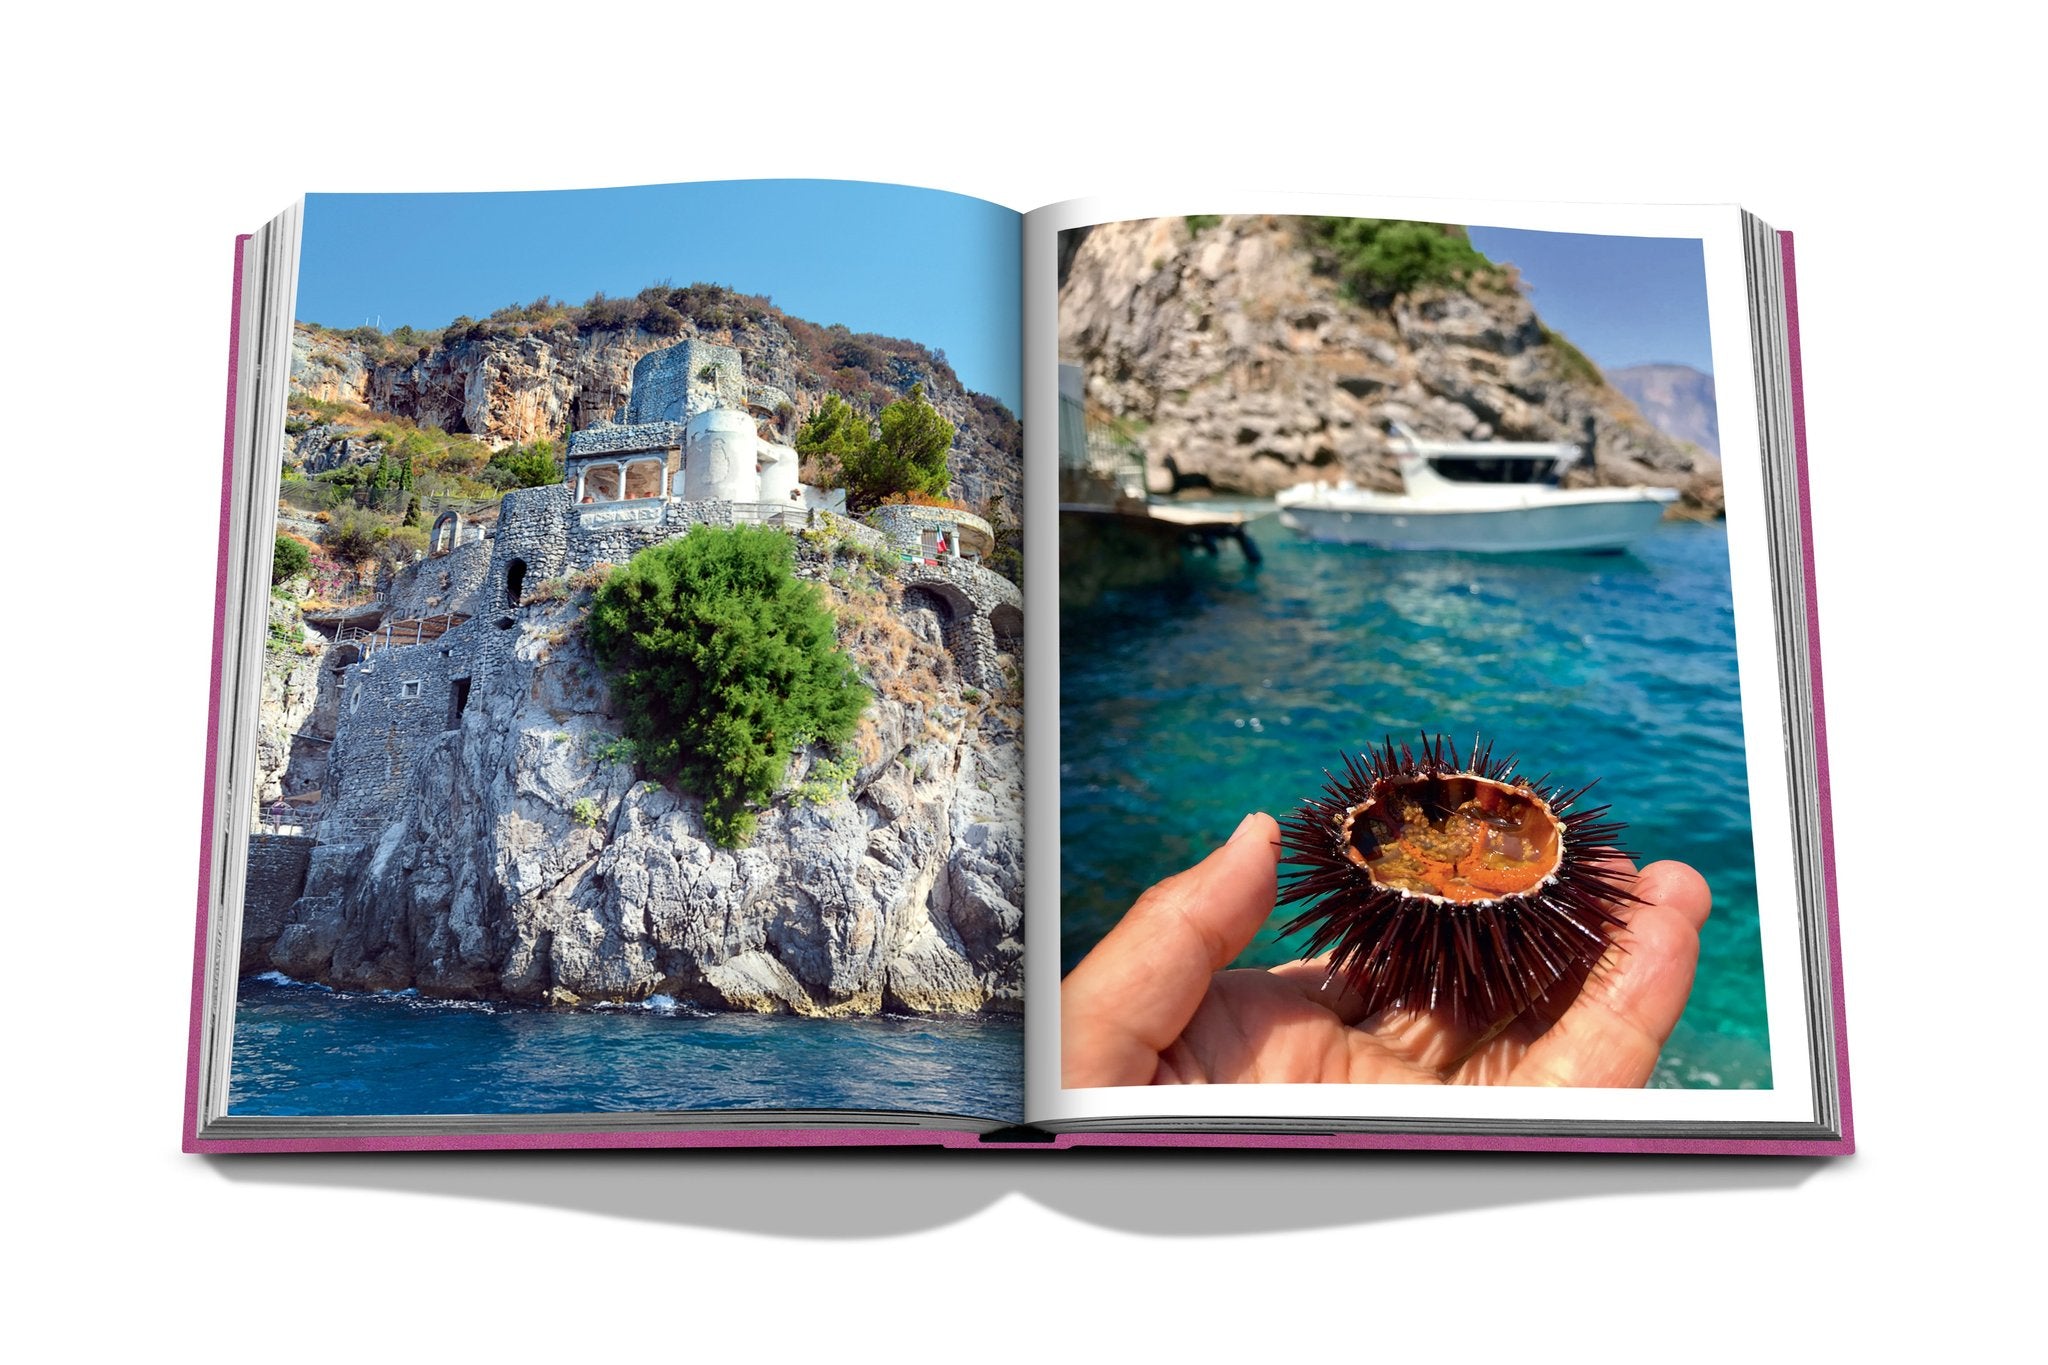 ASSOULINE Amalfi Coast Hardcover Book by Carlos Souza